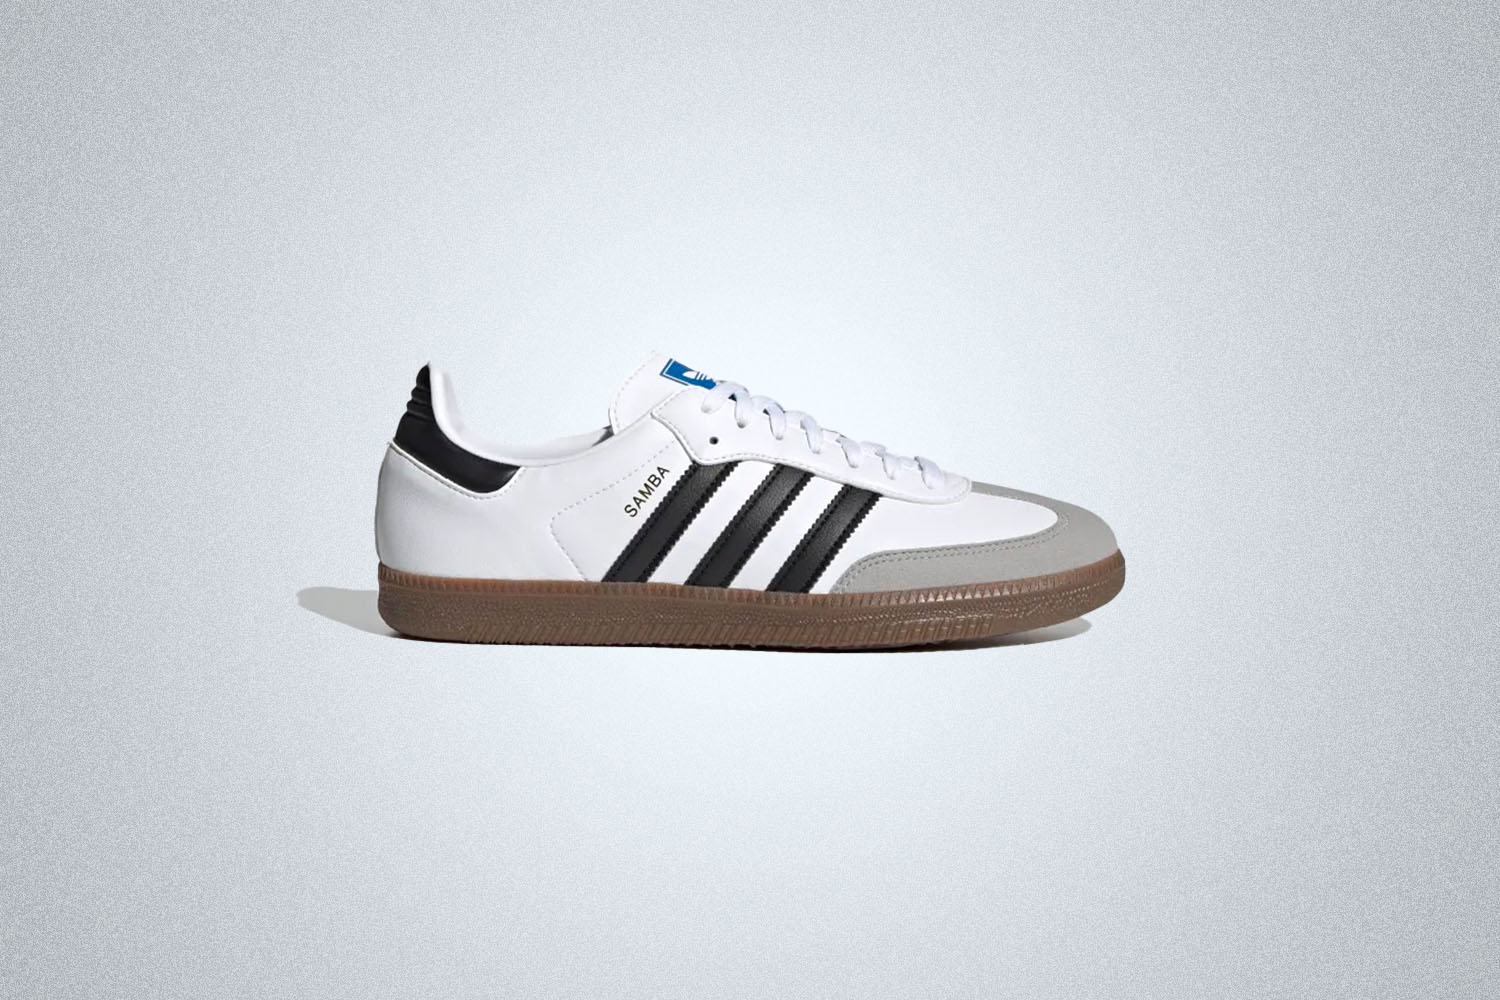 The Adidas Sambas Sneakers on a gray backgorund